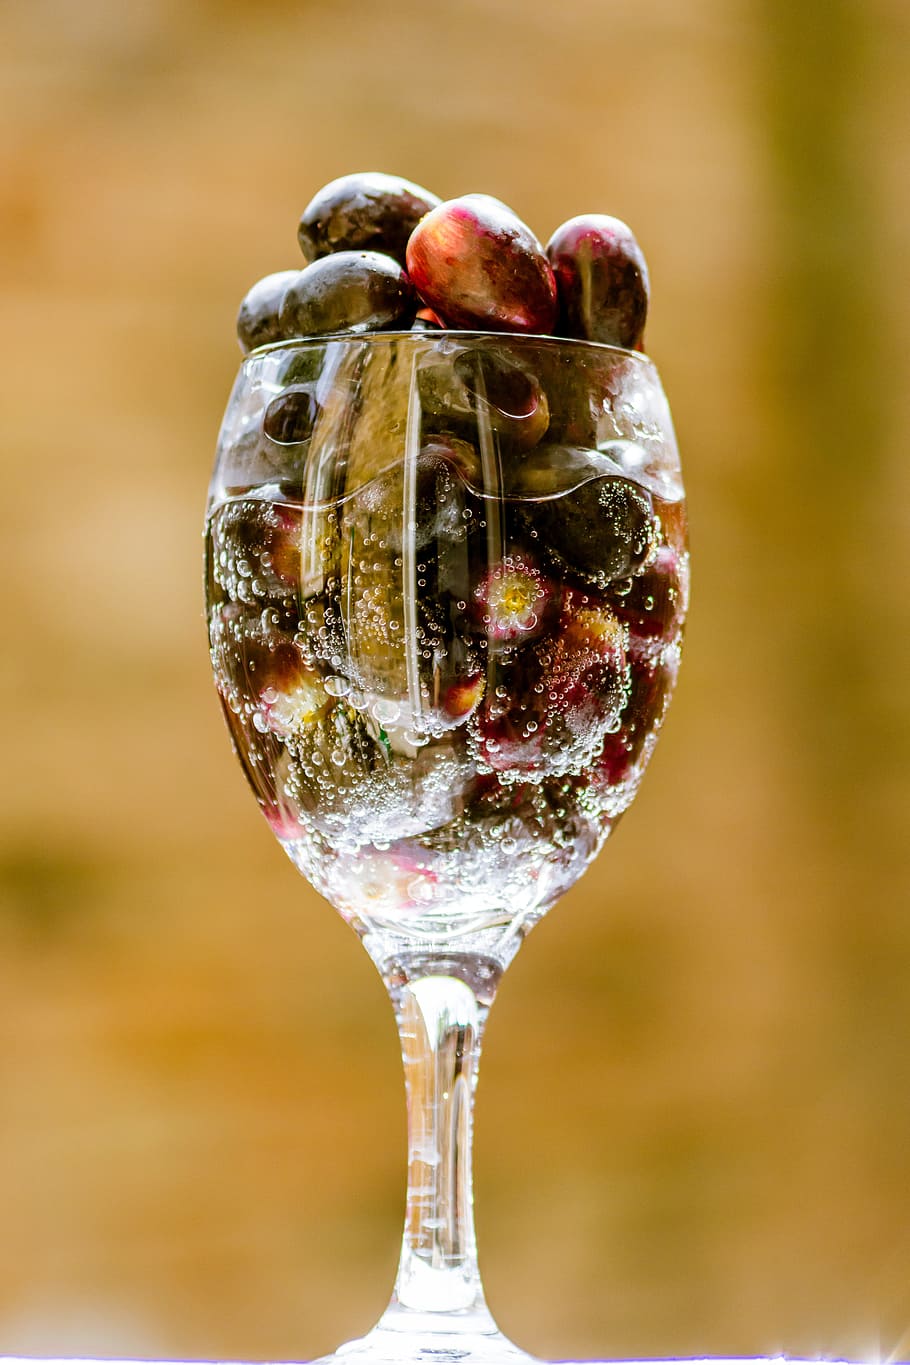 tilt shift lens photography of clear wine glasses, grapes, black